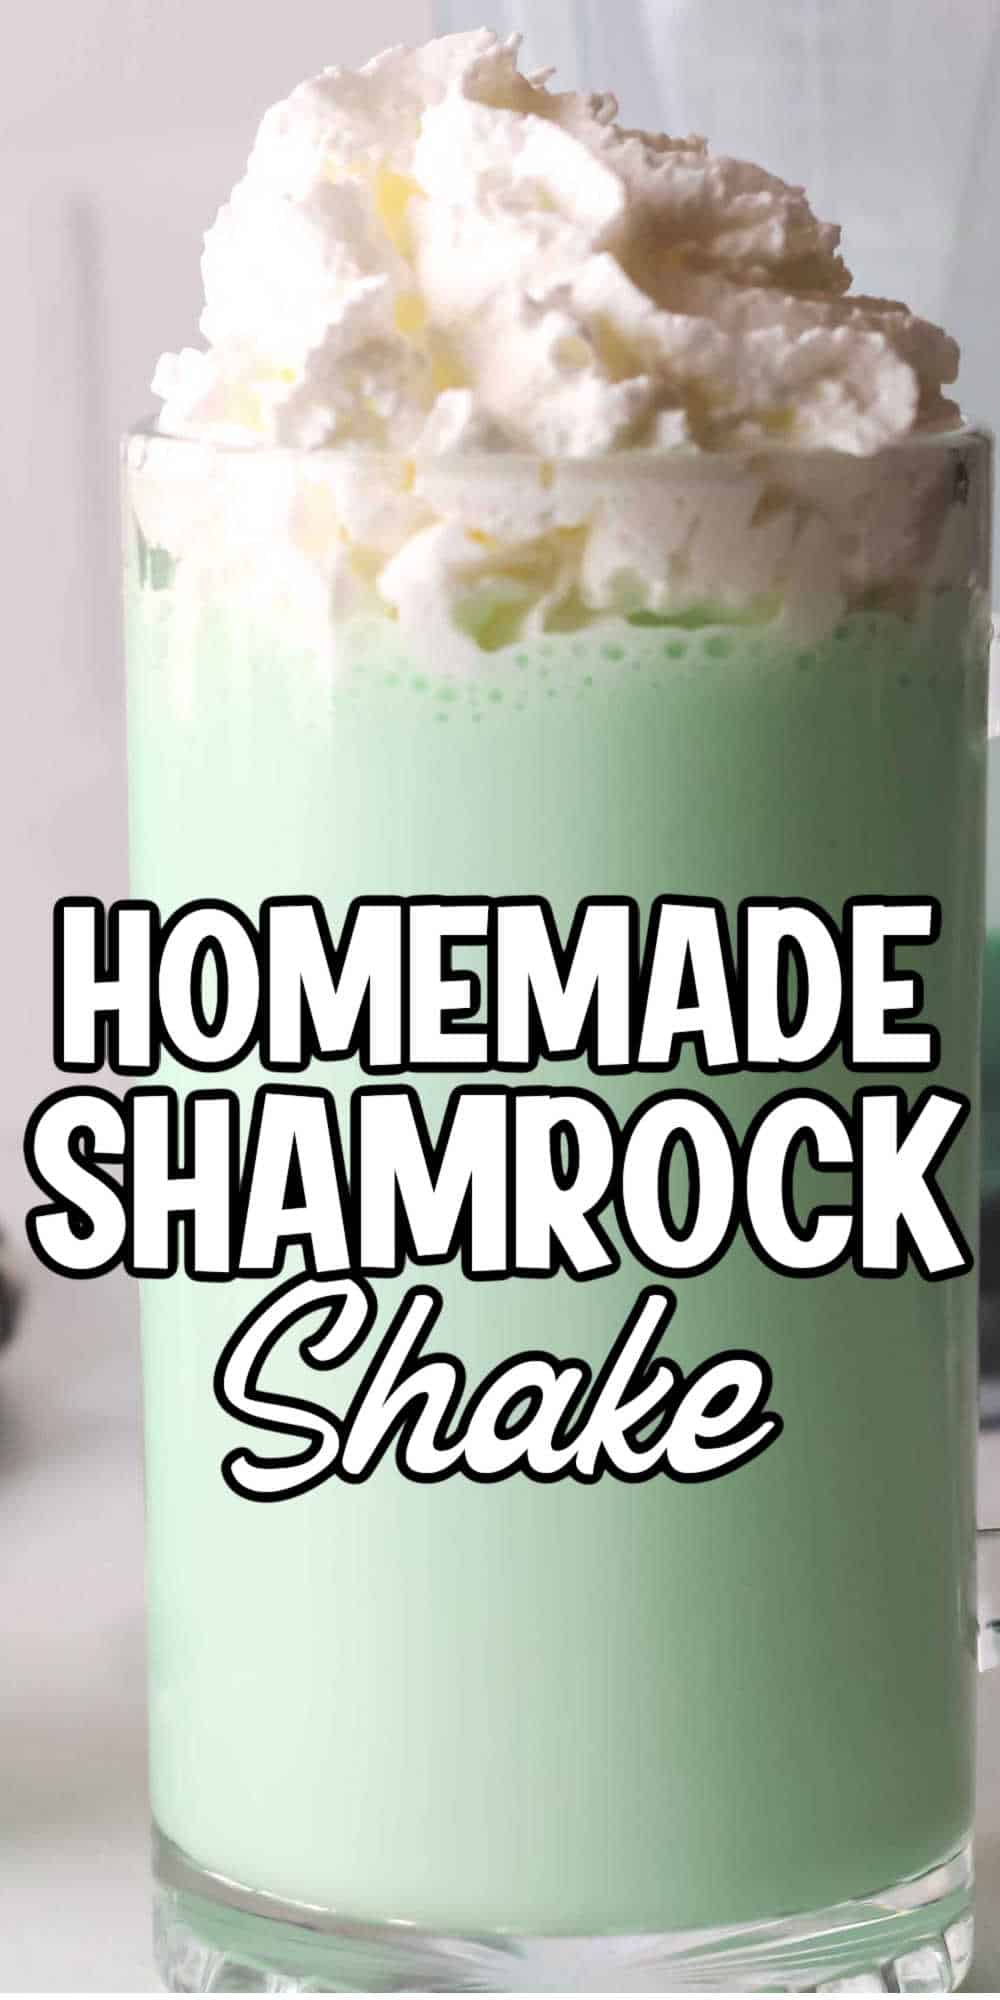 Pin image: Shamrock milkshake in a glass with the words "Homemade Shamrock Shake" on top.